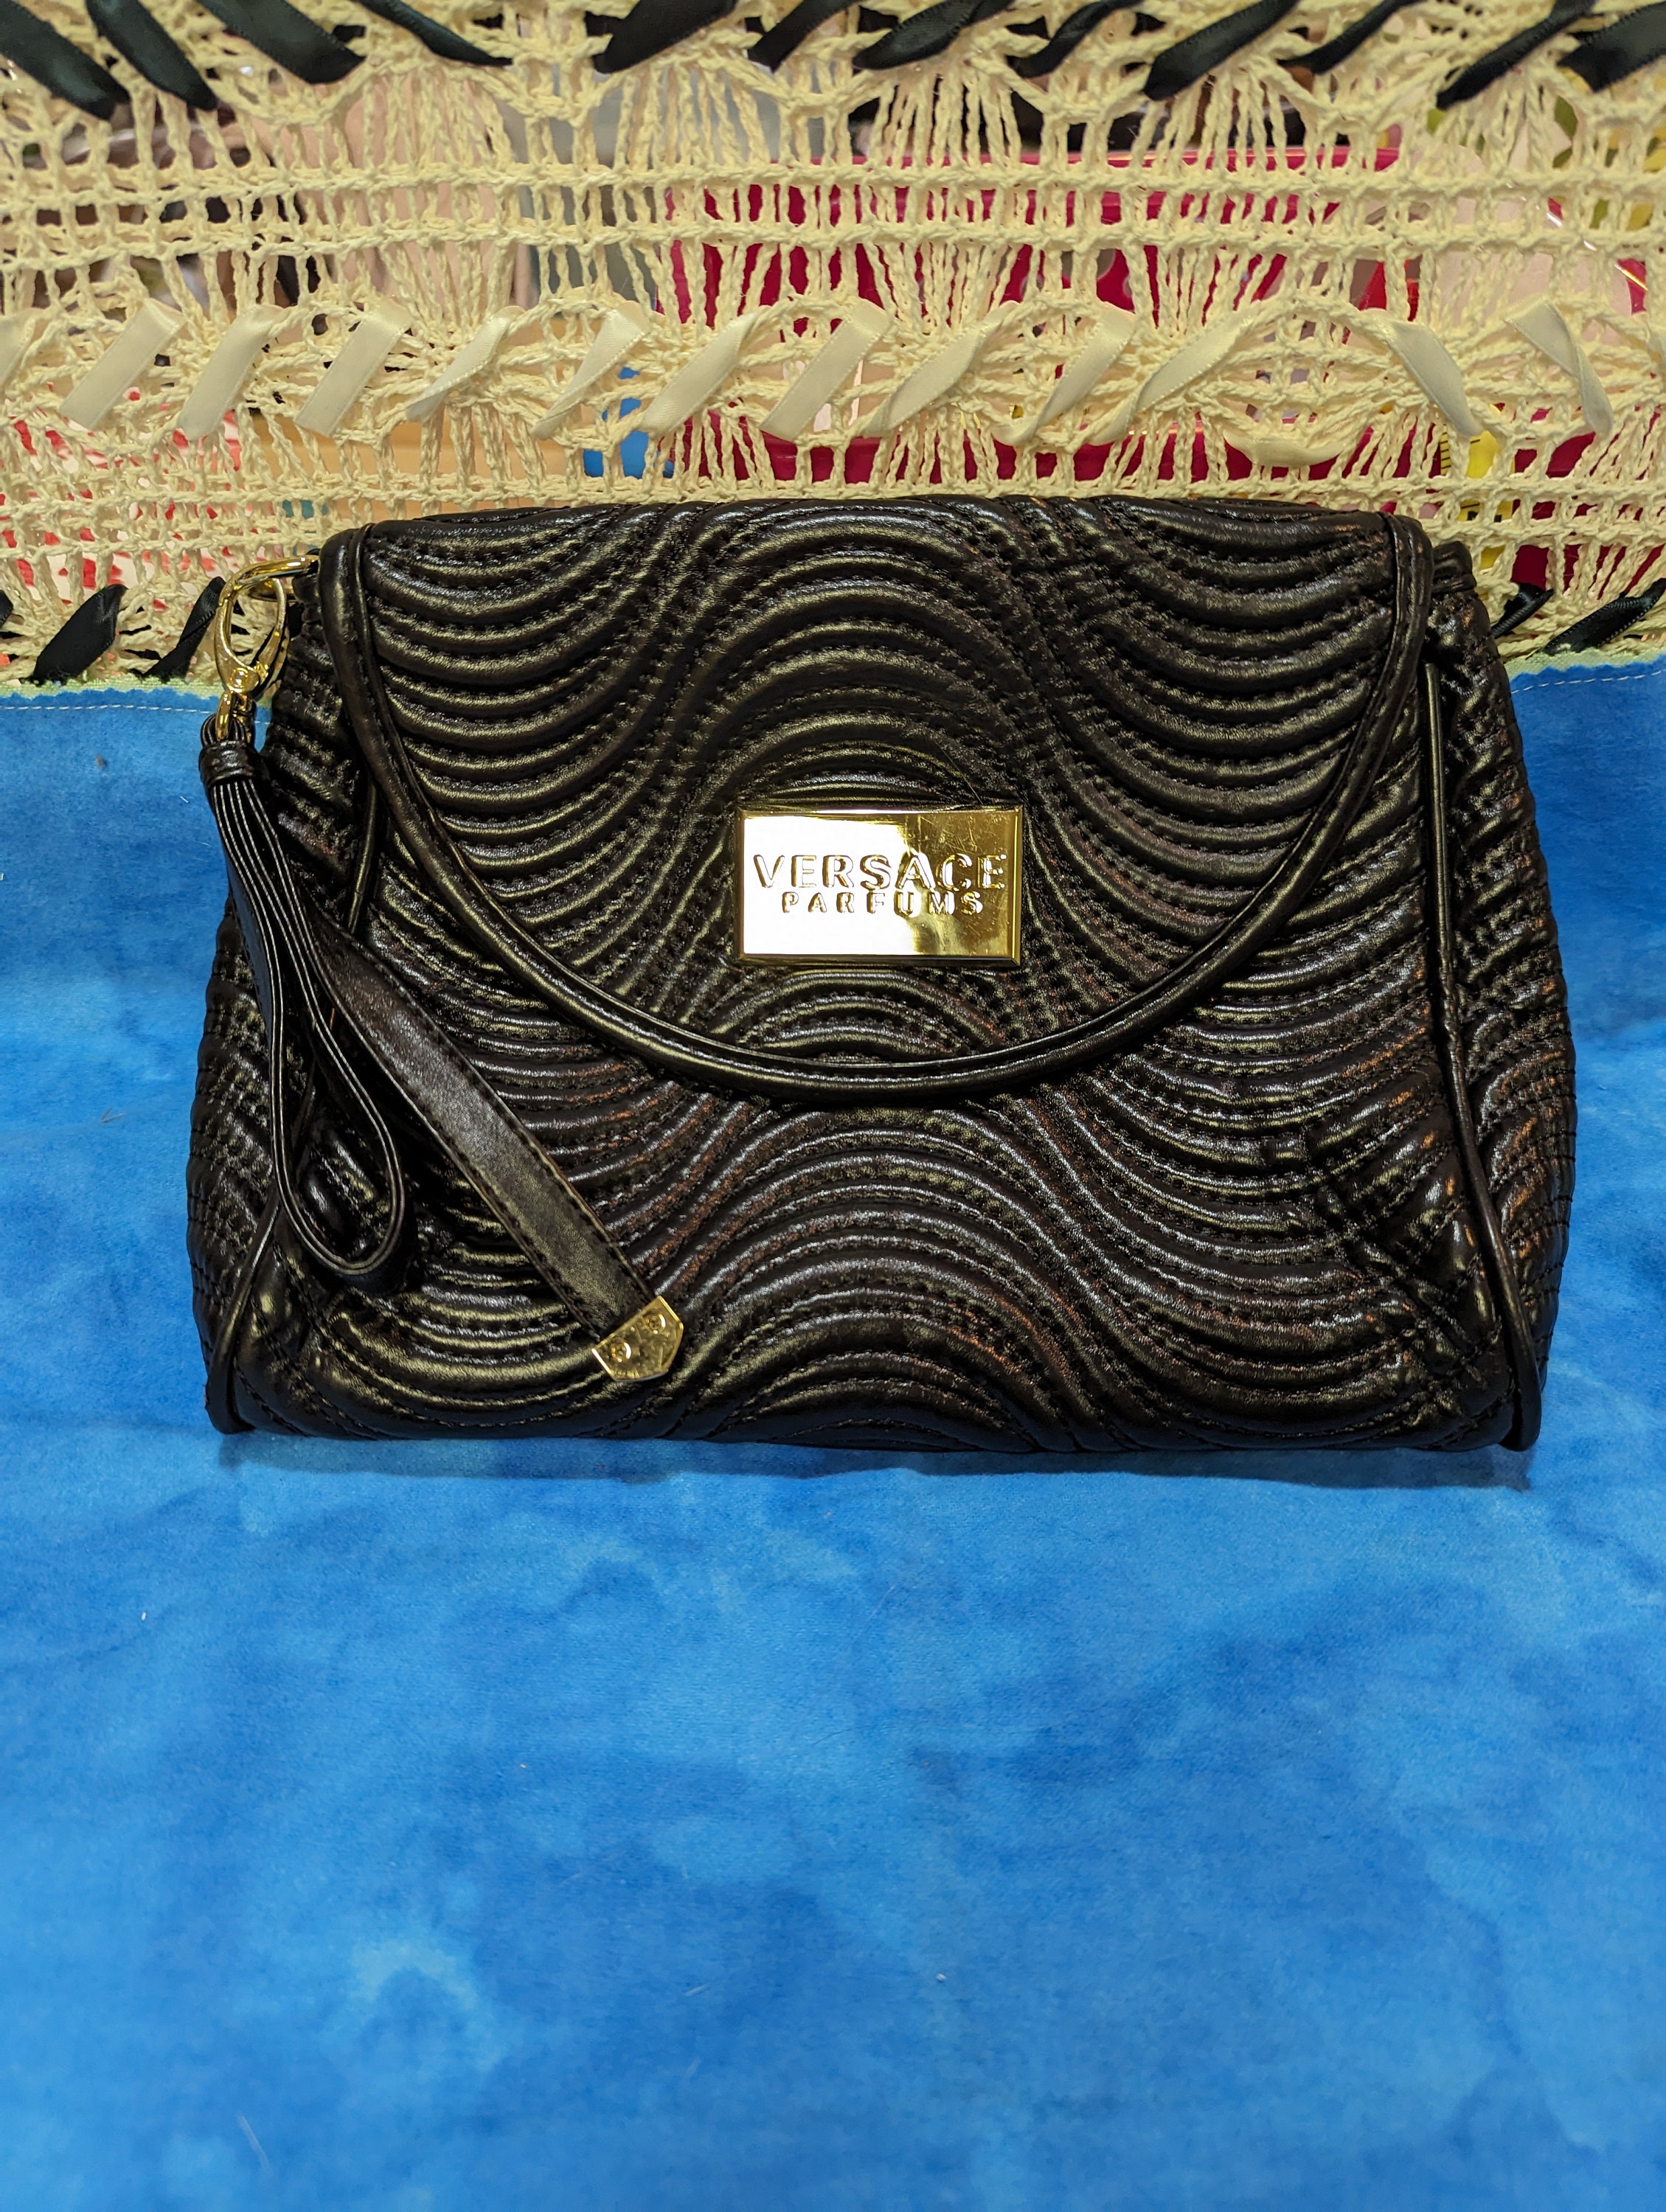 Versace Women's Black Leather Gold Medusa Clutch Handbag Bag